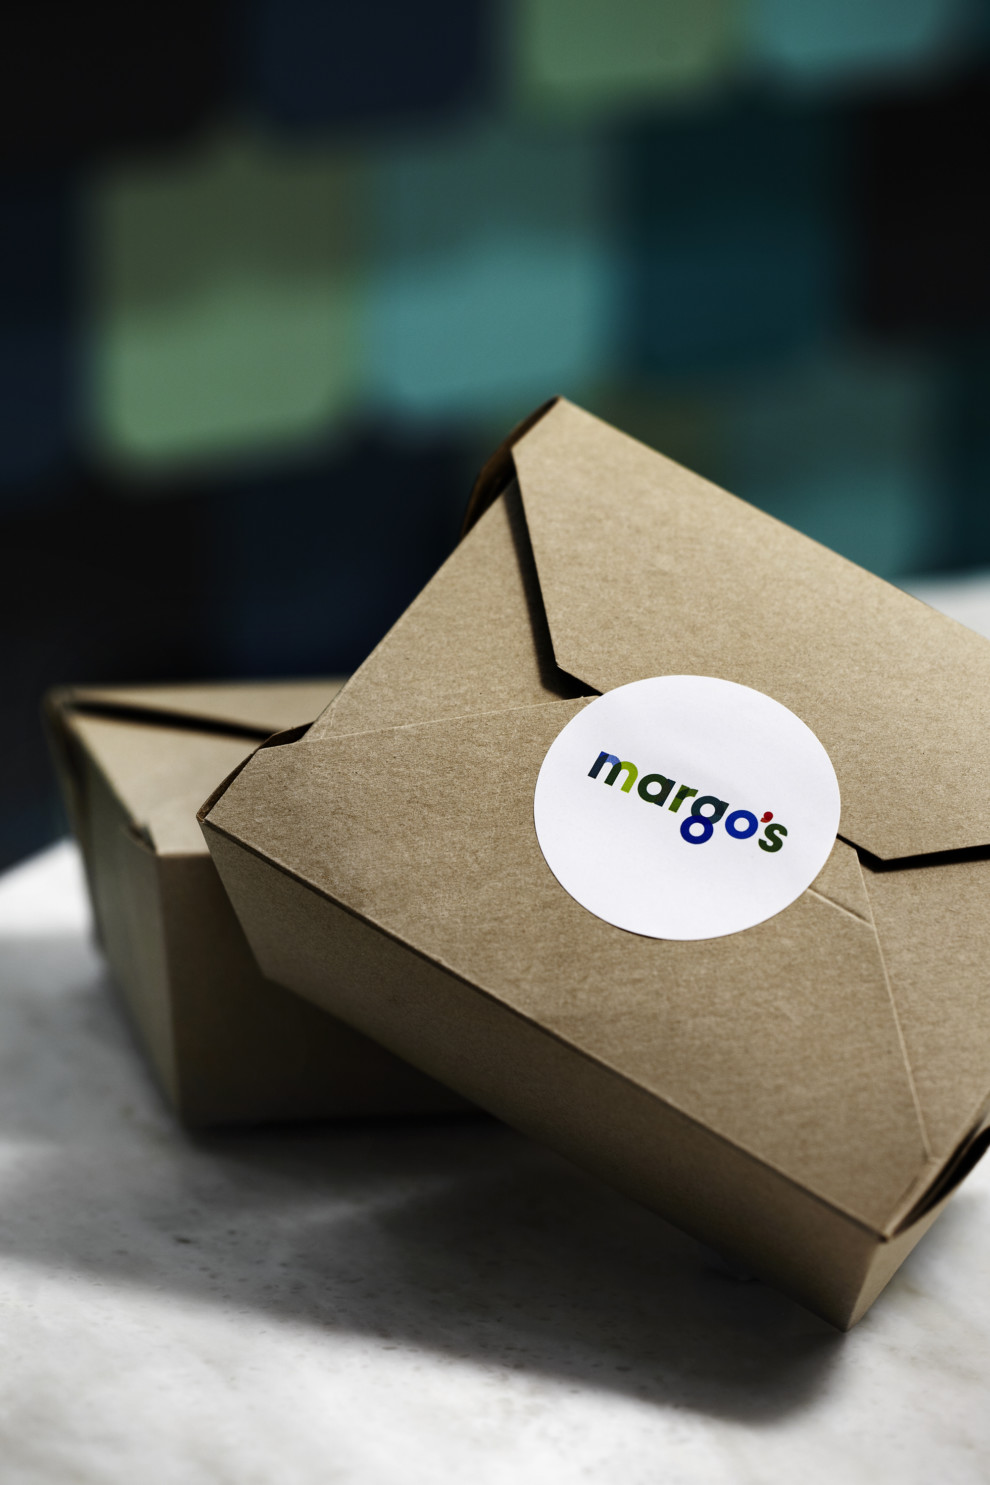 Margo's - Packaging